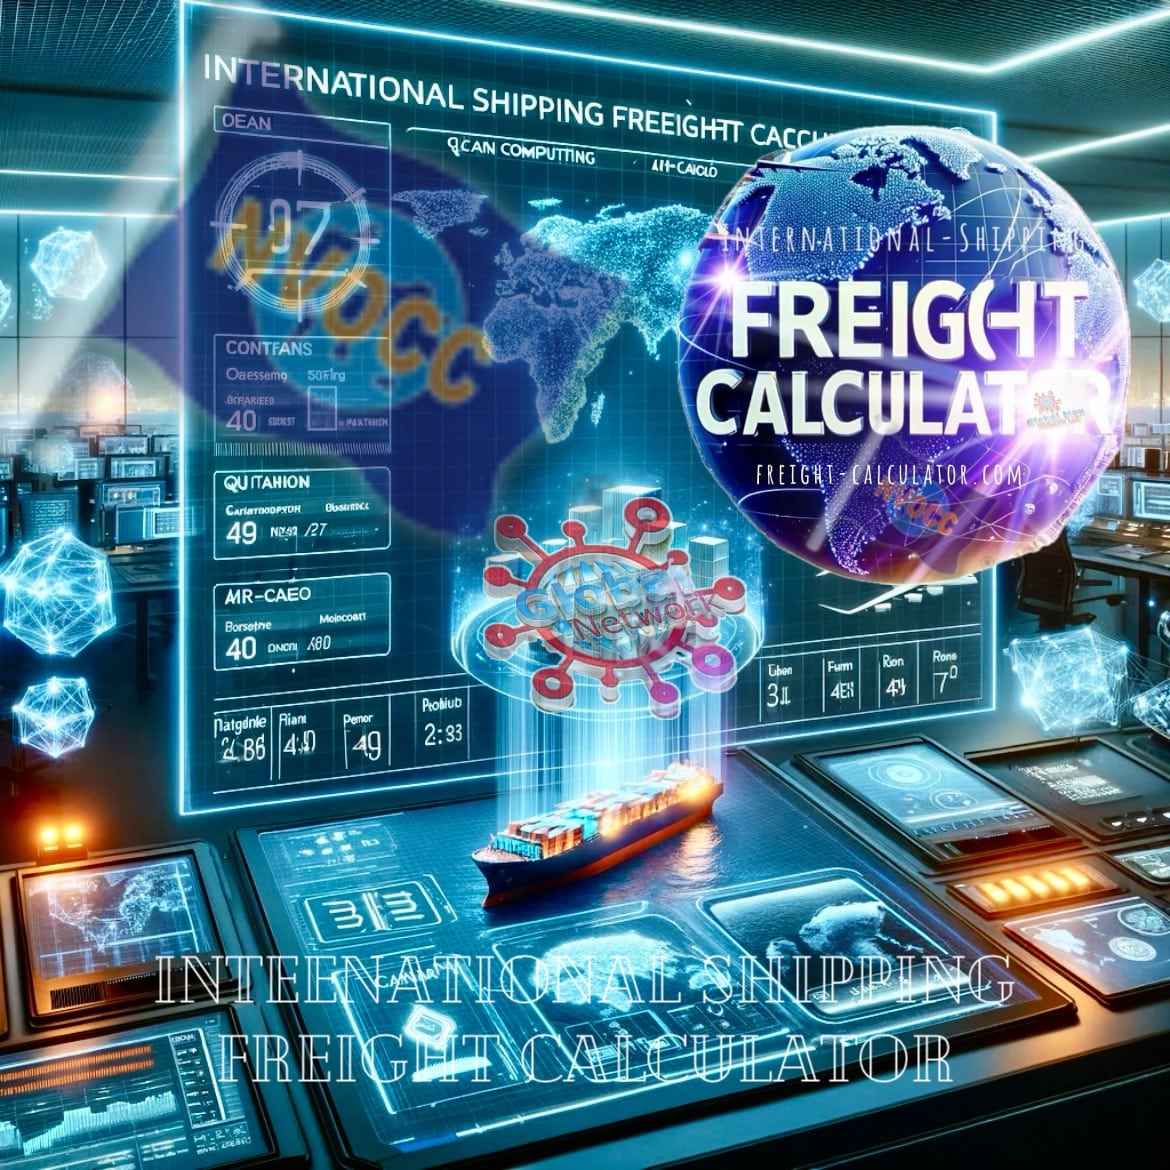 International Shipping Freight Cost Calculator